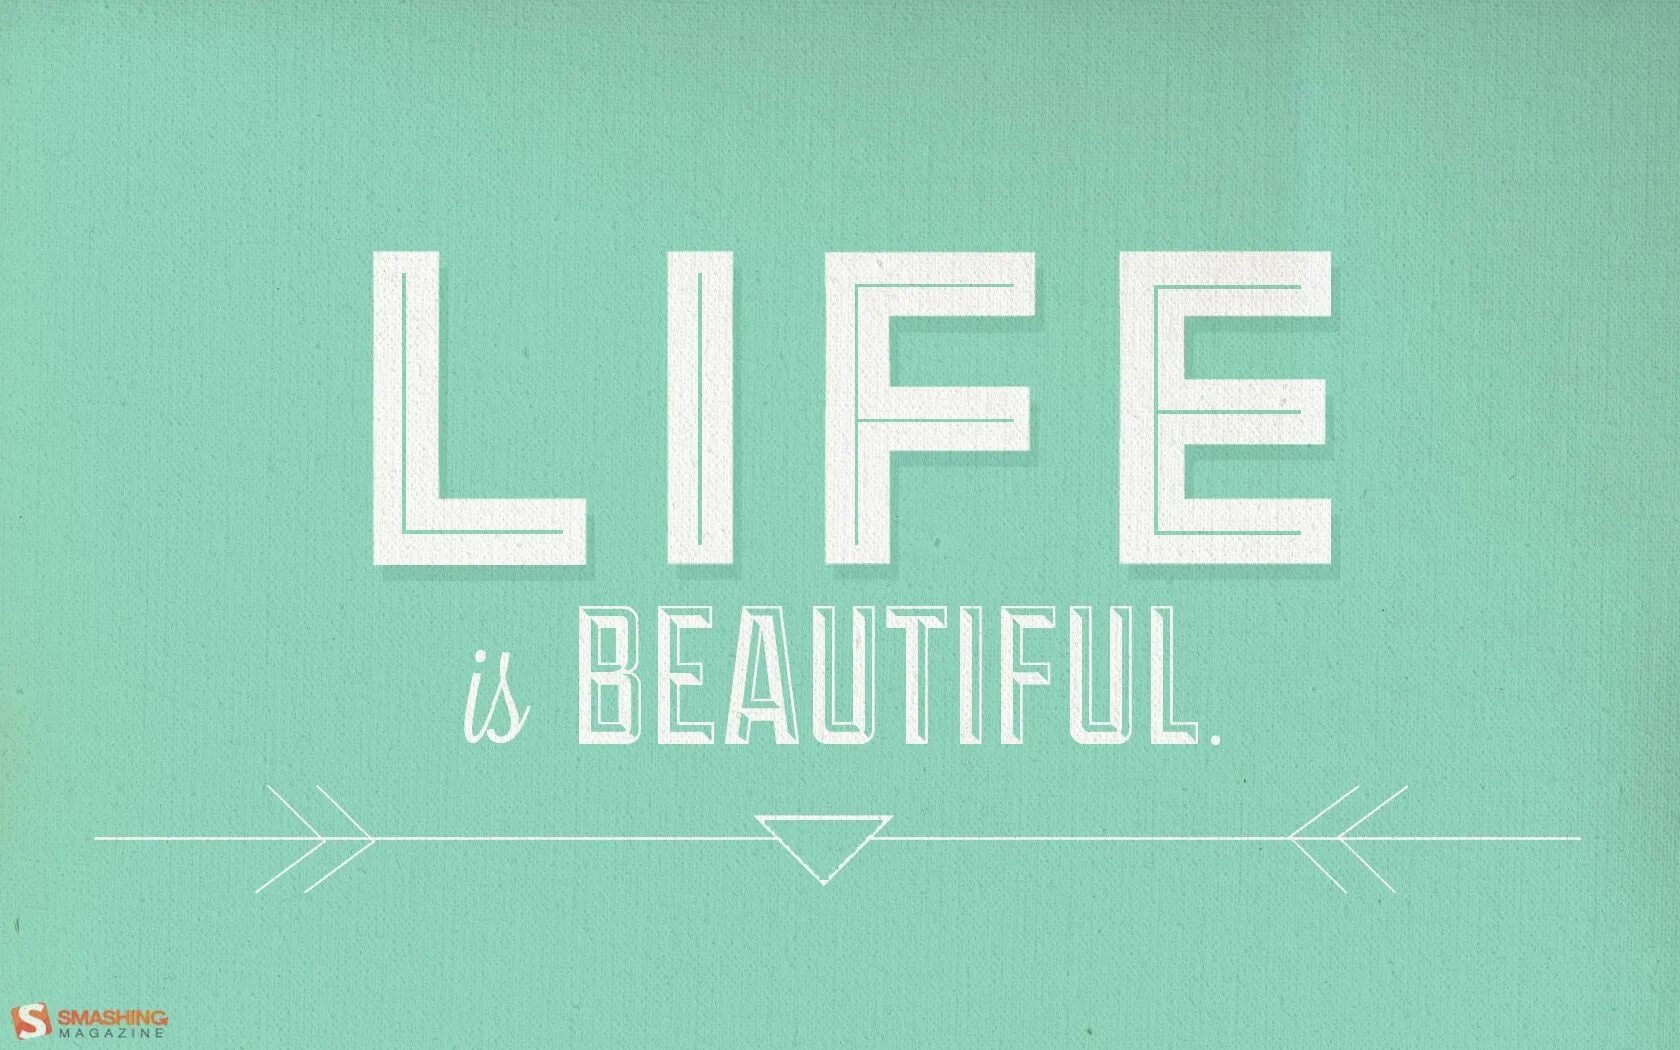 Sensing is life. Life надпись. Картинки с надписью Life. Beautiful Life надпись. Life is beautiful картинки.